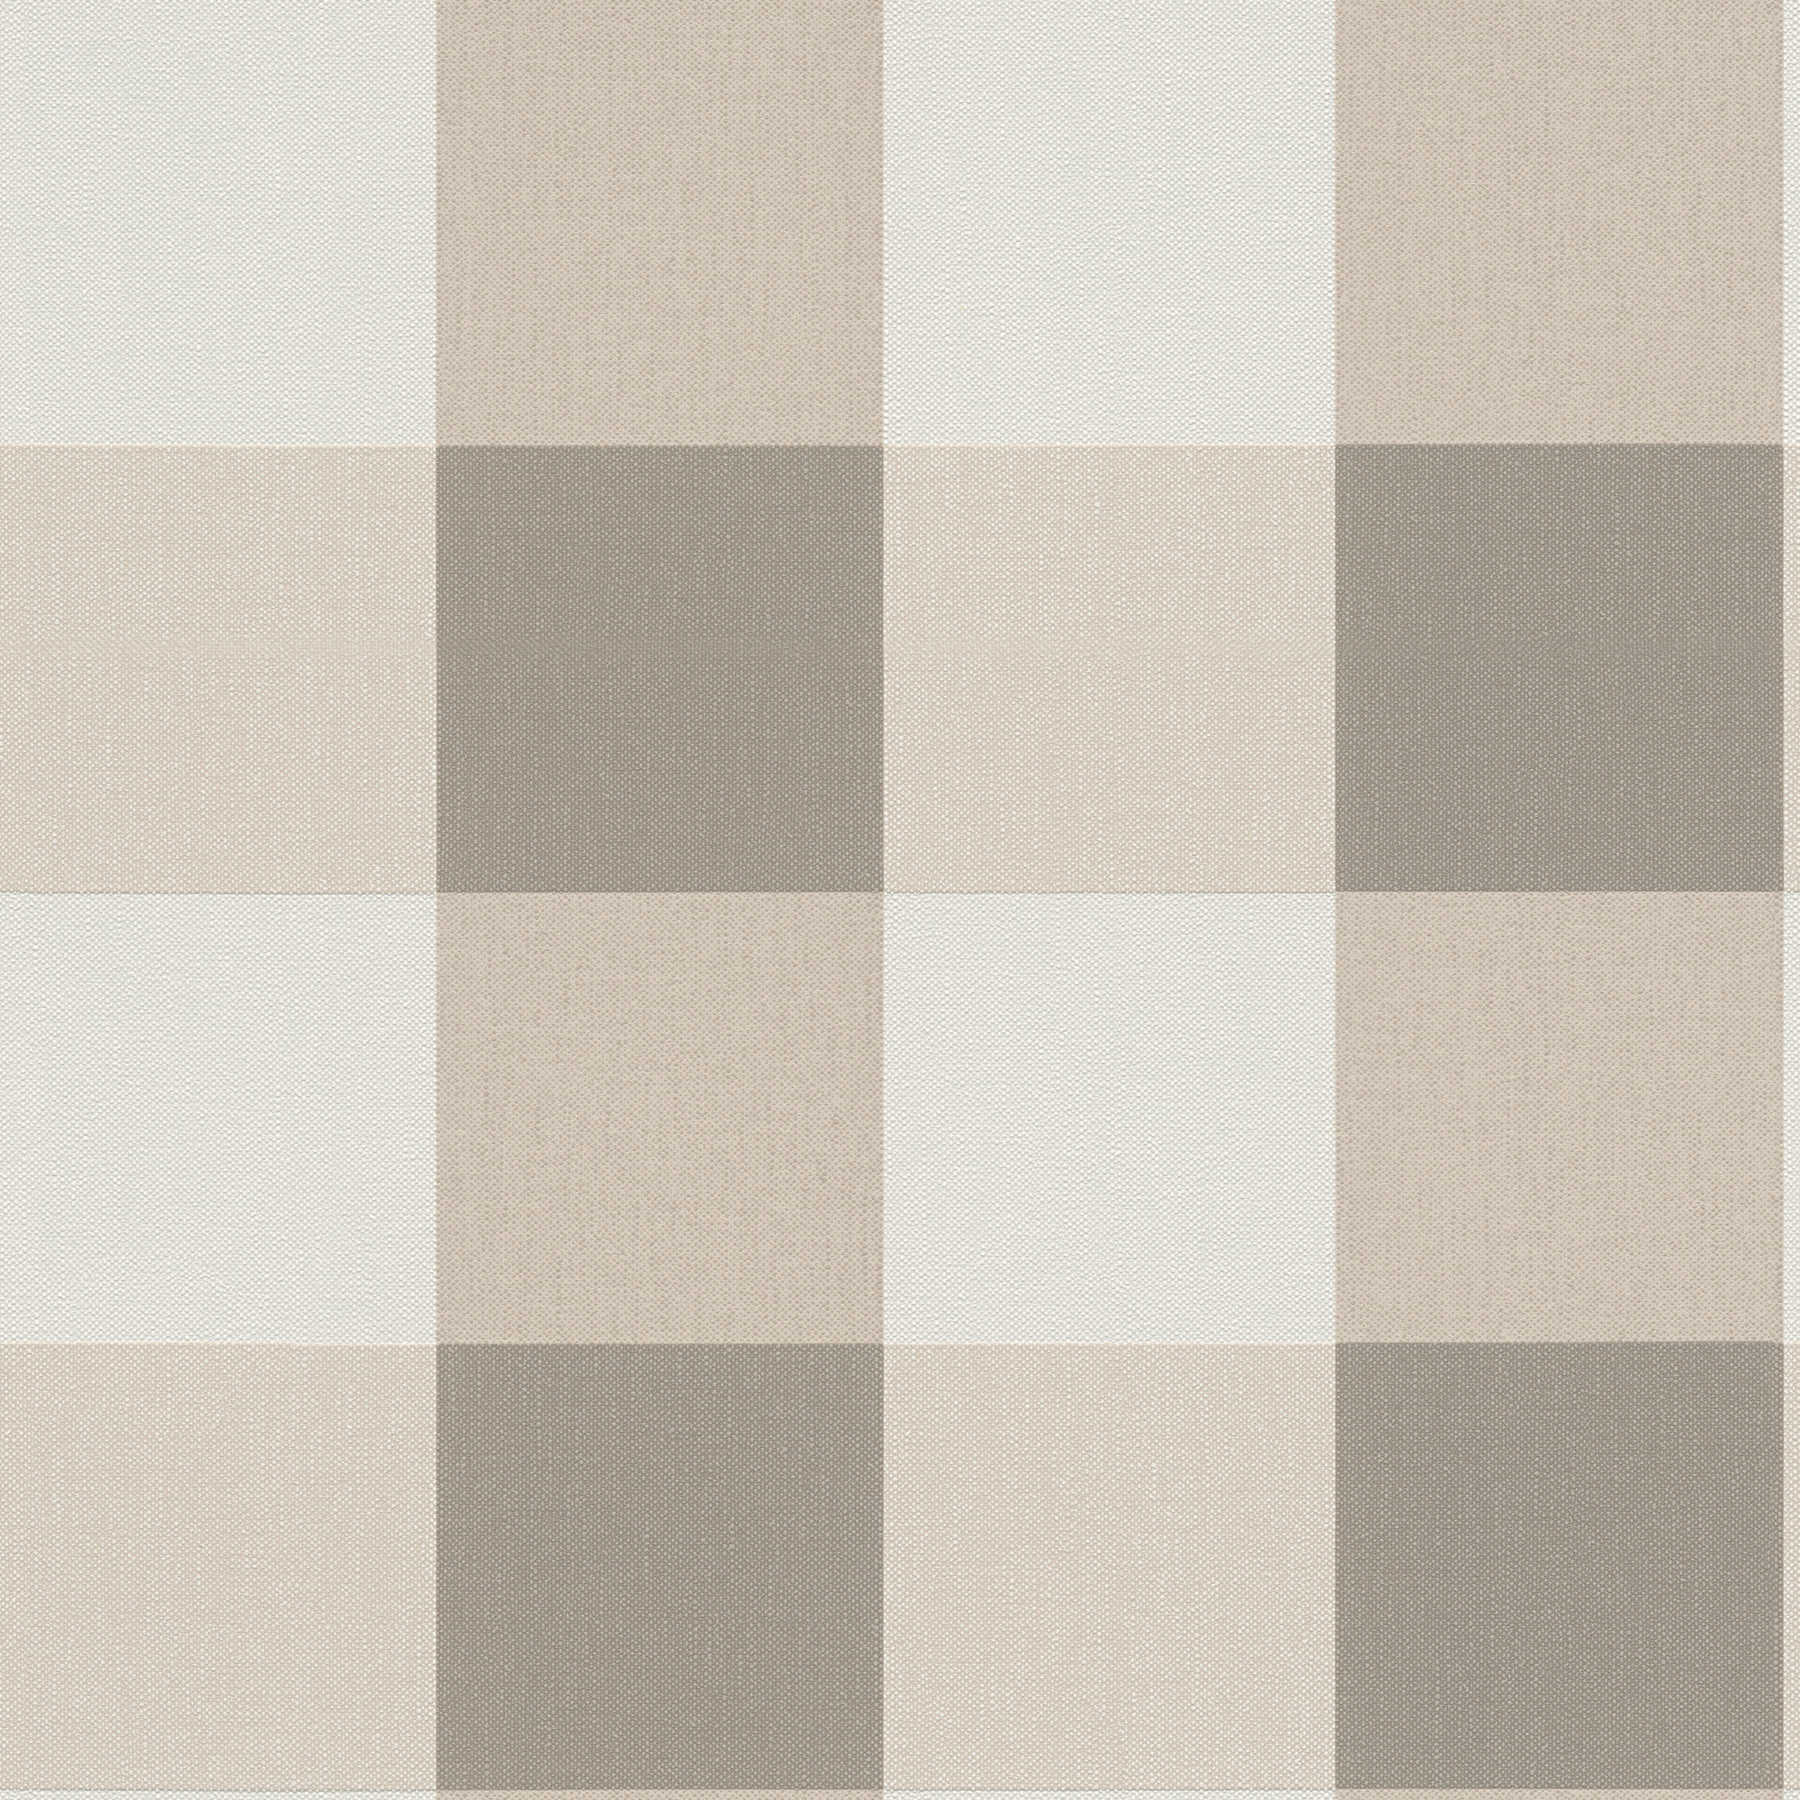 Plaid wallpaper with textile look in harmonious colours - beige, cream
